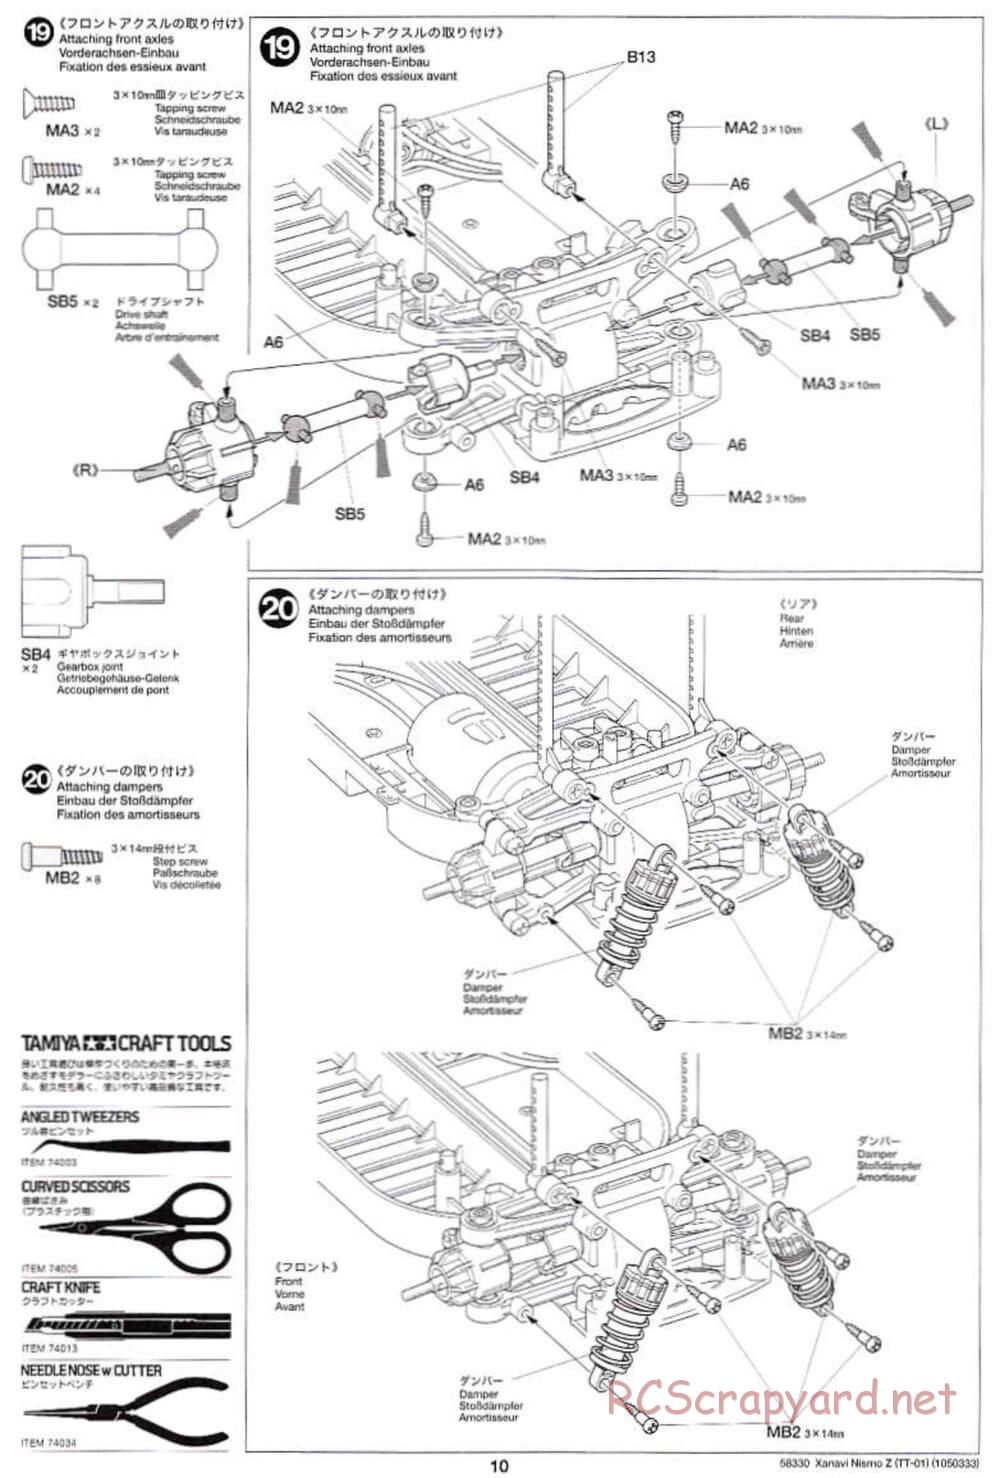 Tamiya - Xanavi Nismo Z - TT-01 Chassis - Manual - Page 10